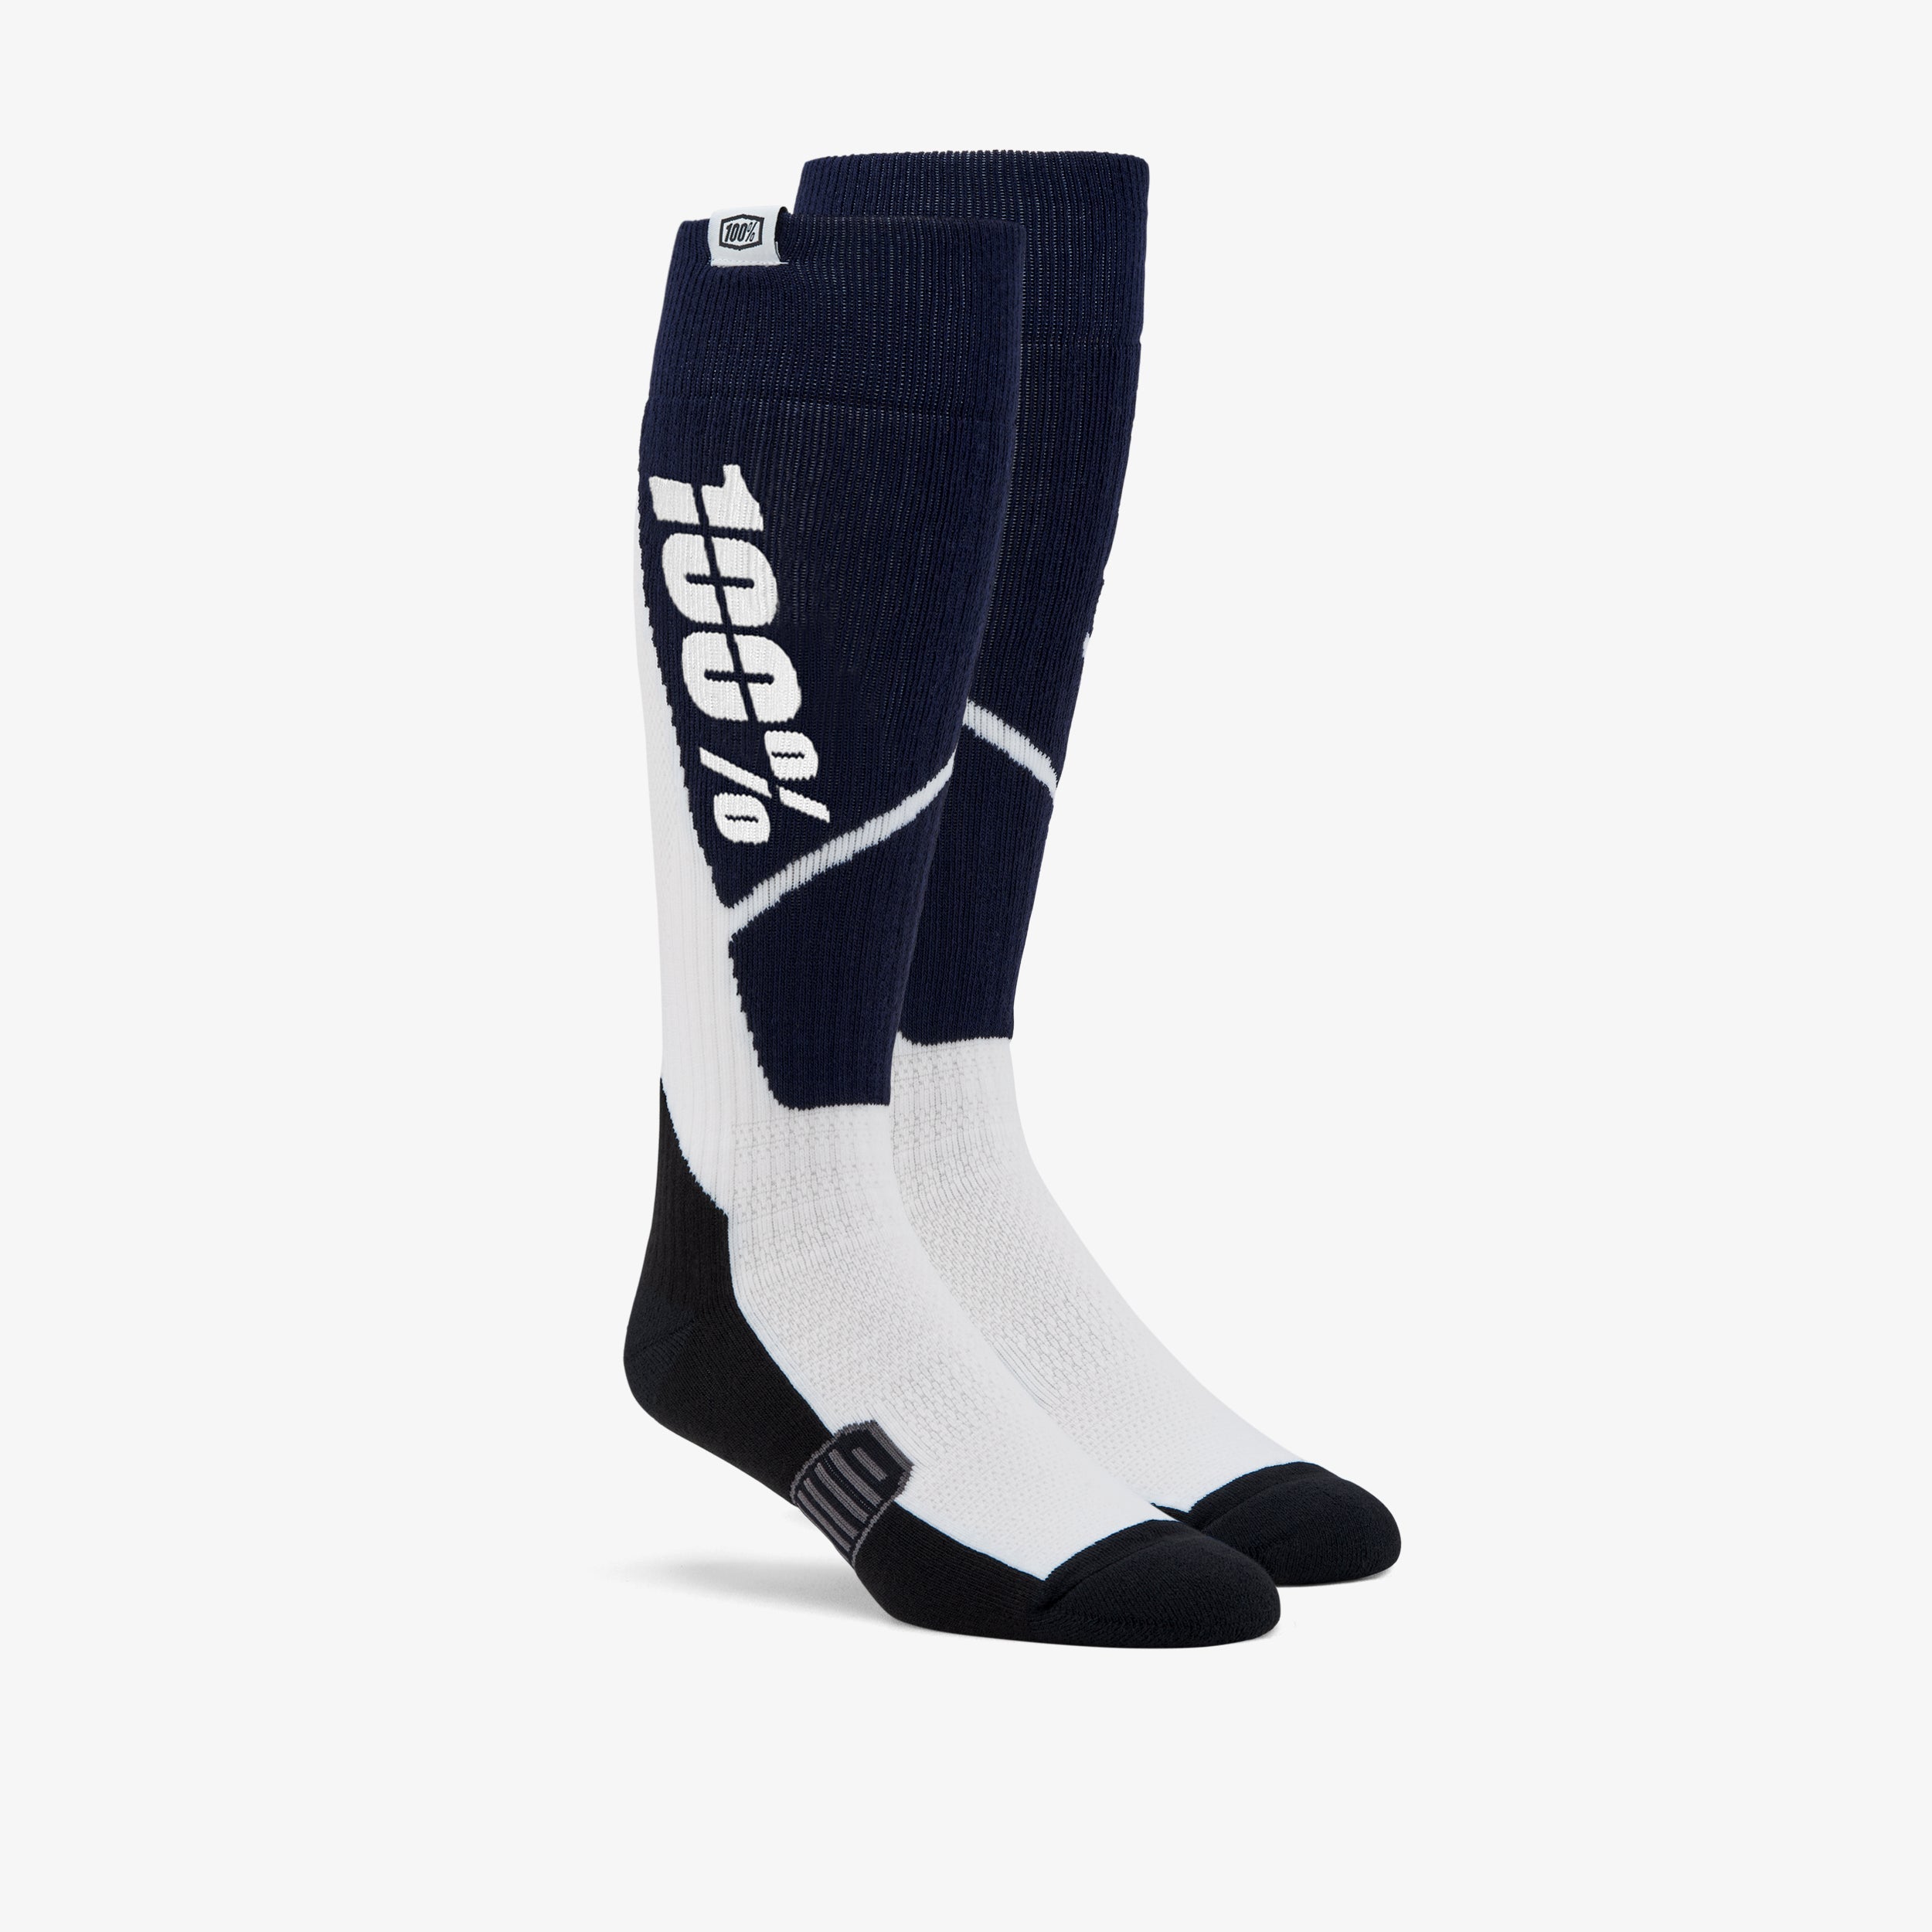 TORQUE Thick Comfort MX Sock Navy/White